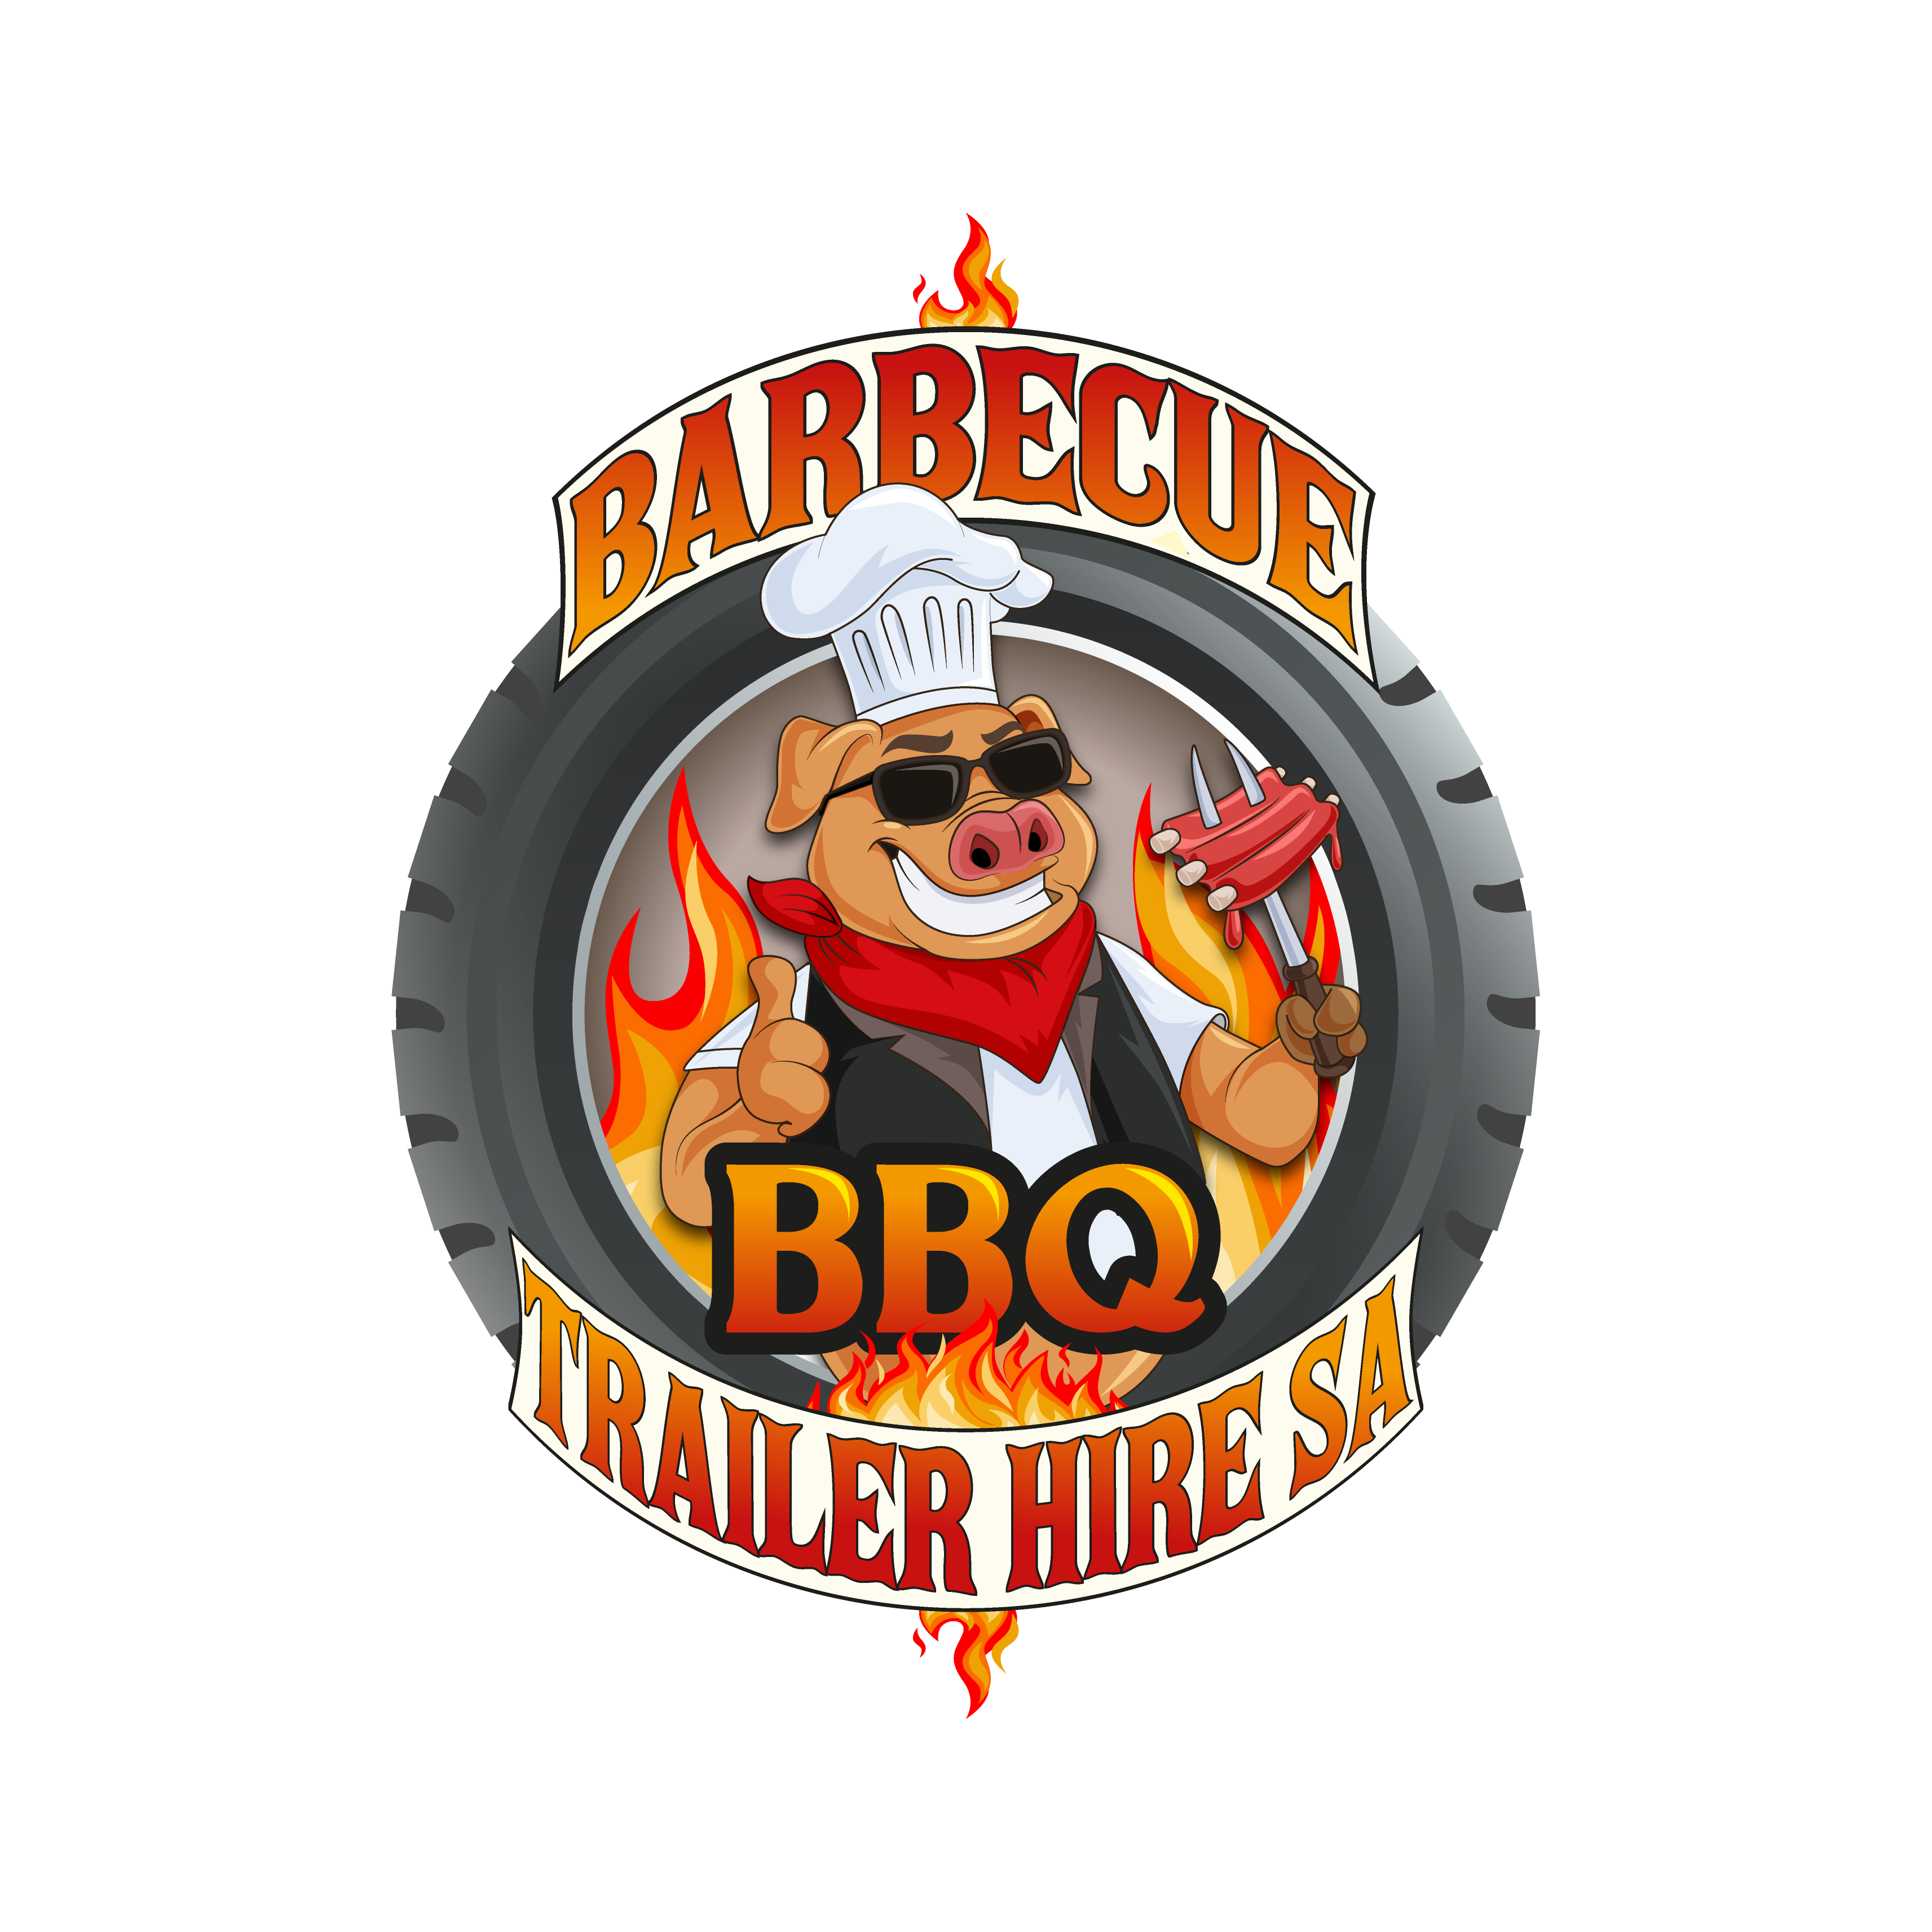 BBQ Trailer Hire SA logo design 2 outlines_1.png